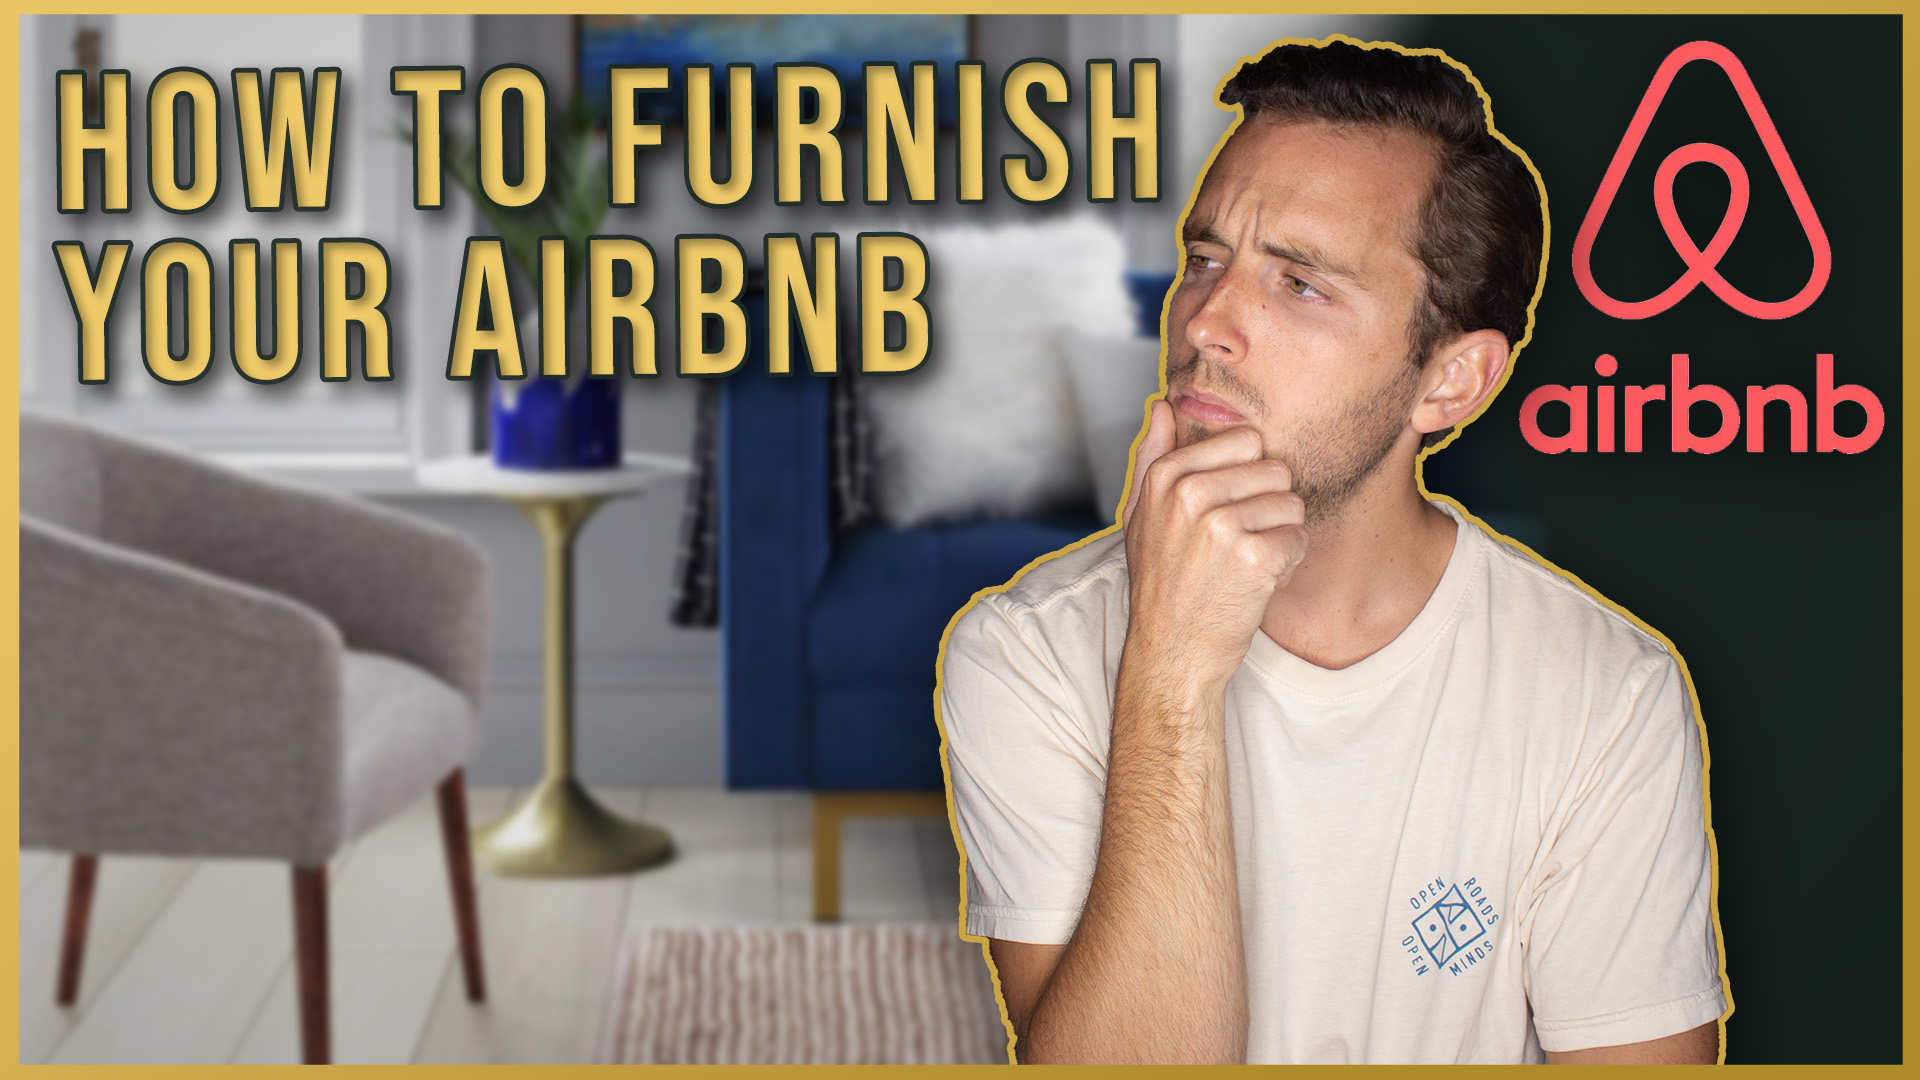 Furnishing an Airbnb